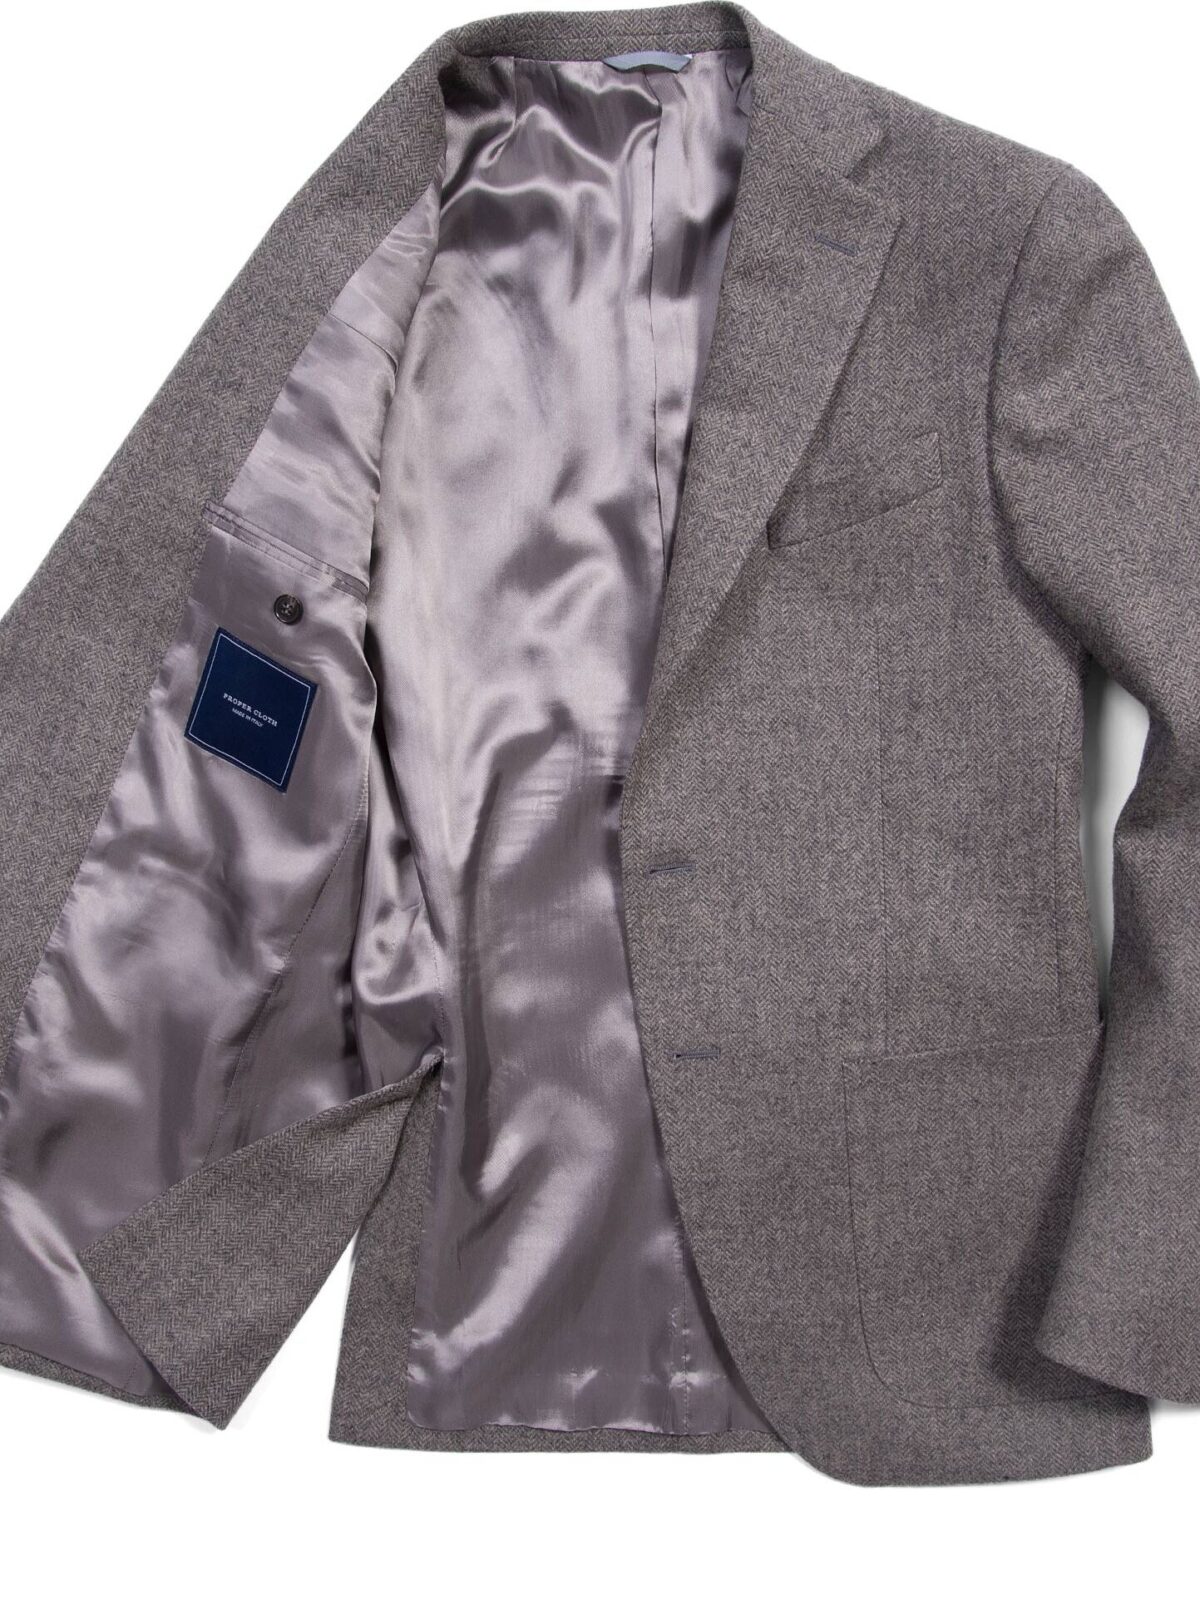 Hubert Grey Herringbone Jacket